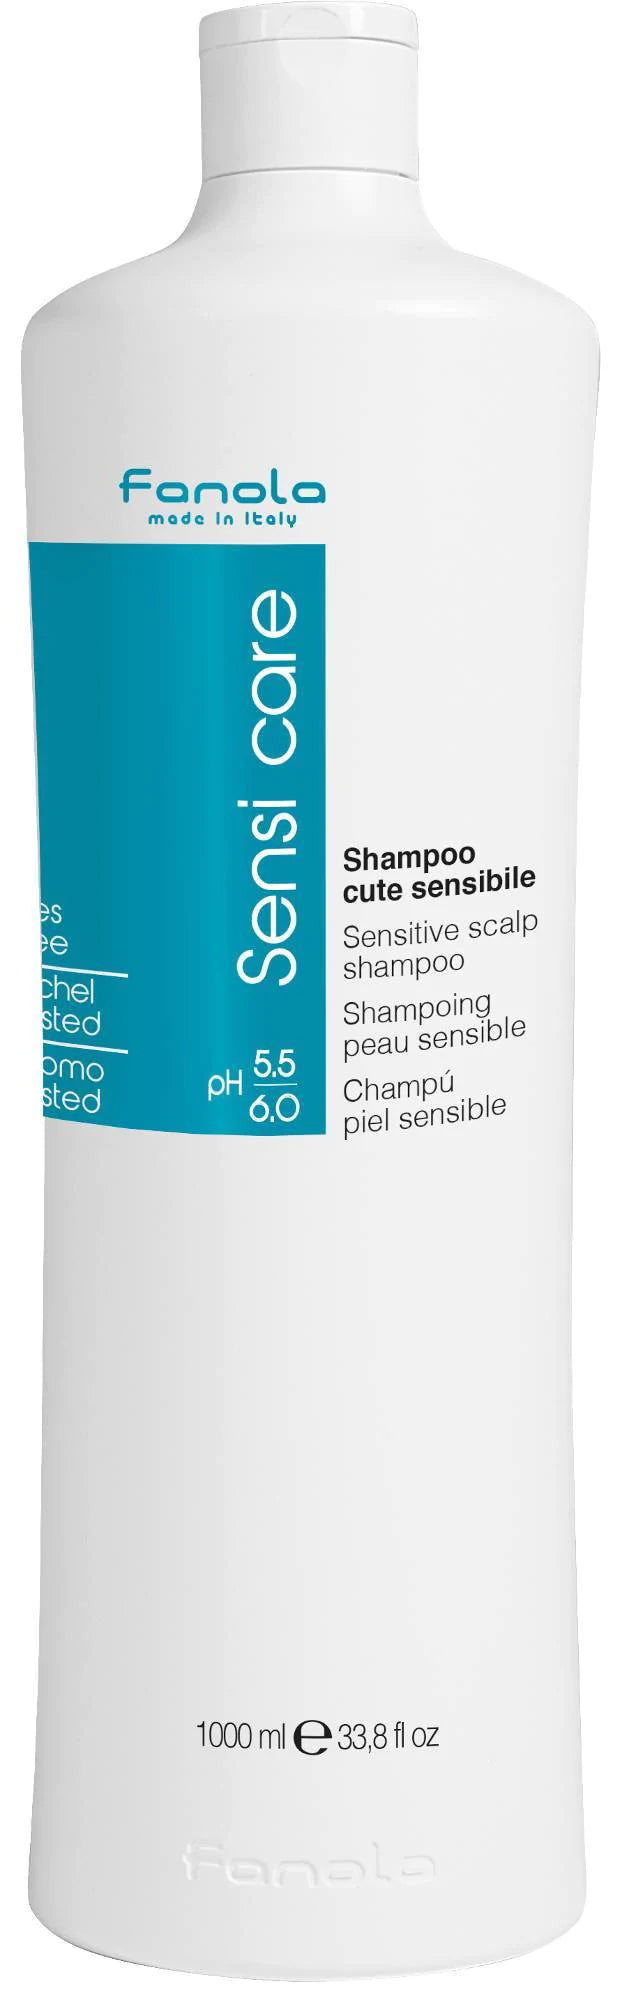 Fanola Sensi Care Sensitive Scalp Shampoo 1L